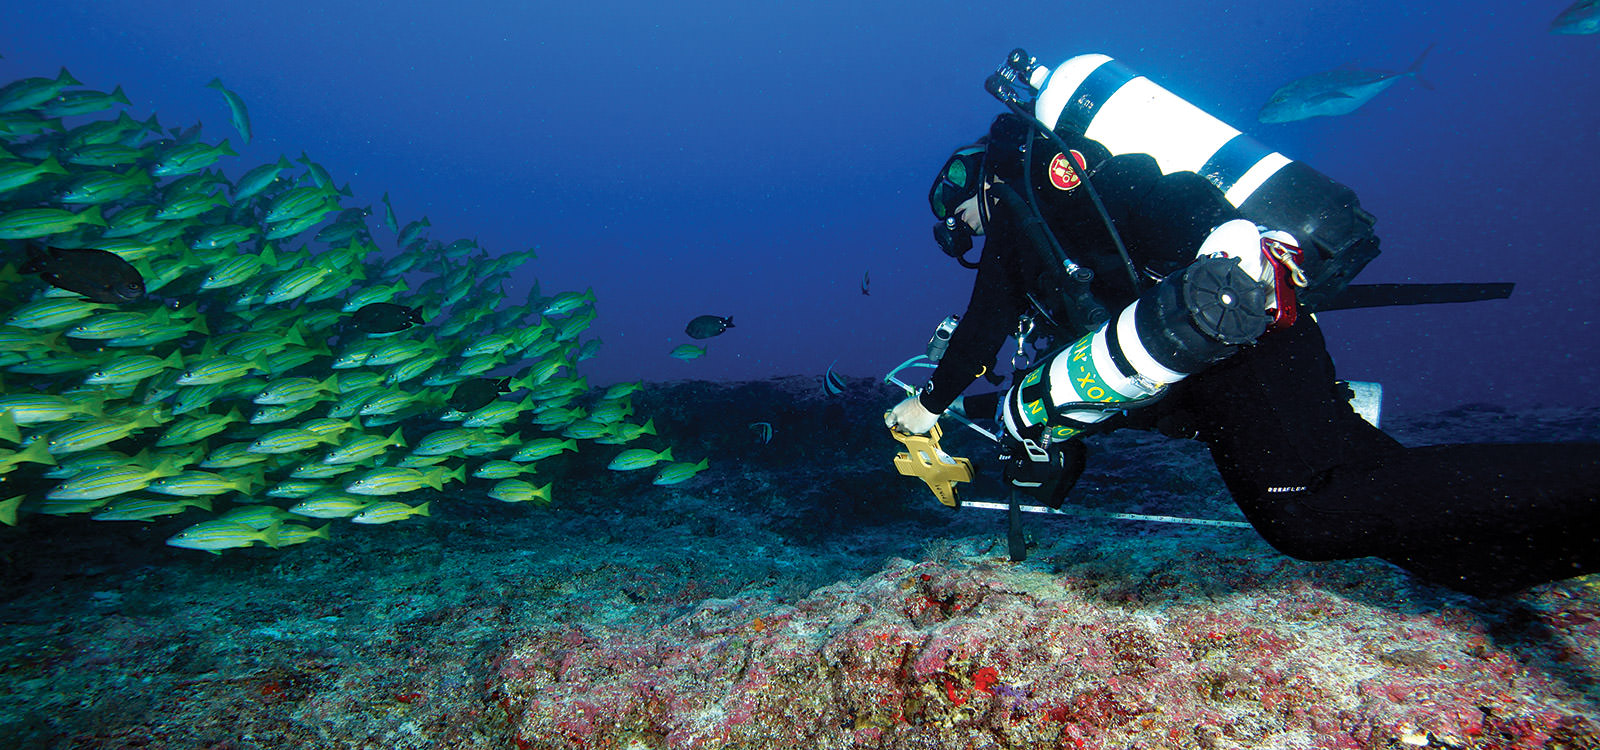 Kane surveys a deep reef teeming with fish